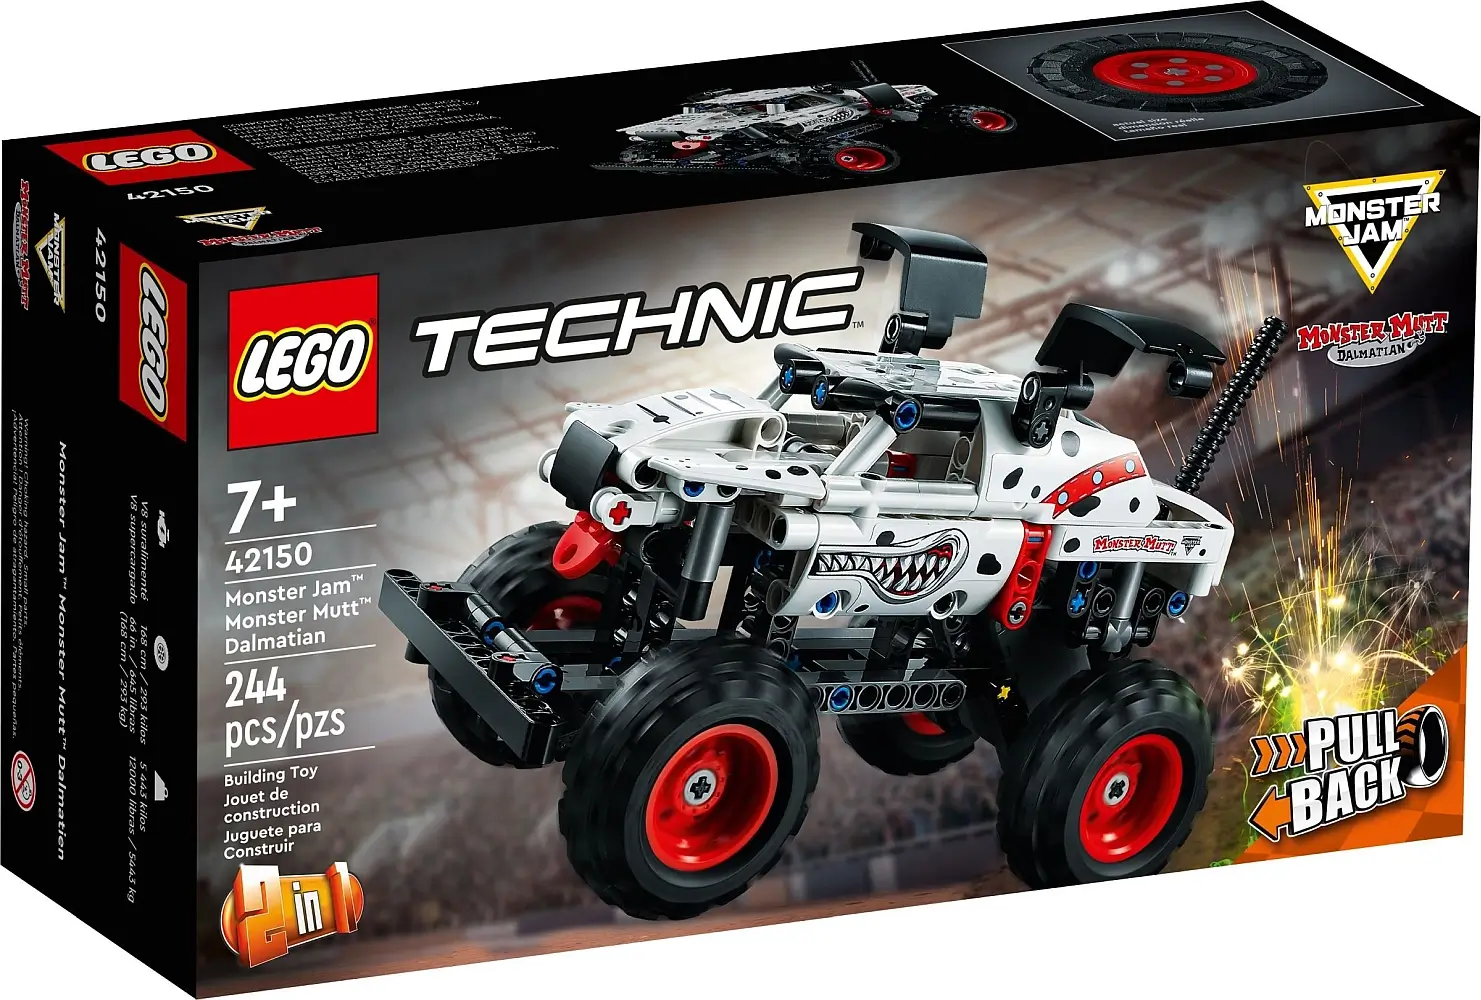 Pudełko zestawu 42150 z serii LEGO® Technic™ – Monster Mutt™ Dalmatian